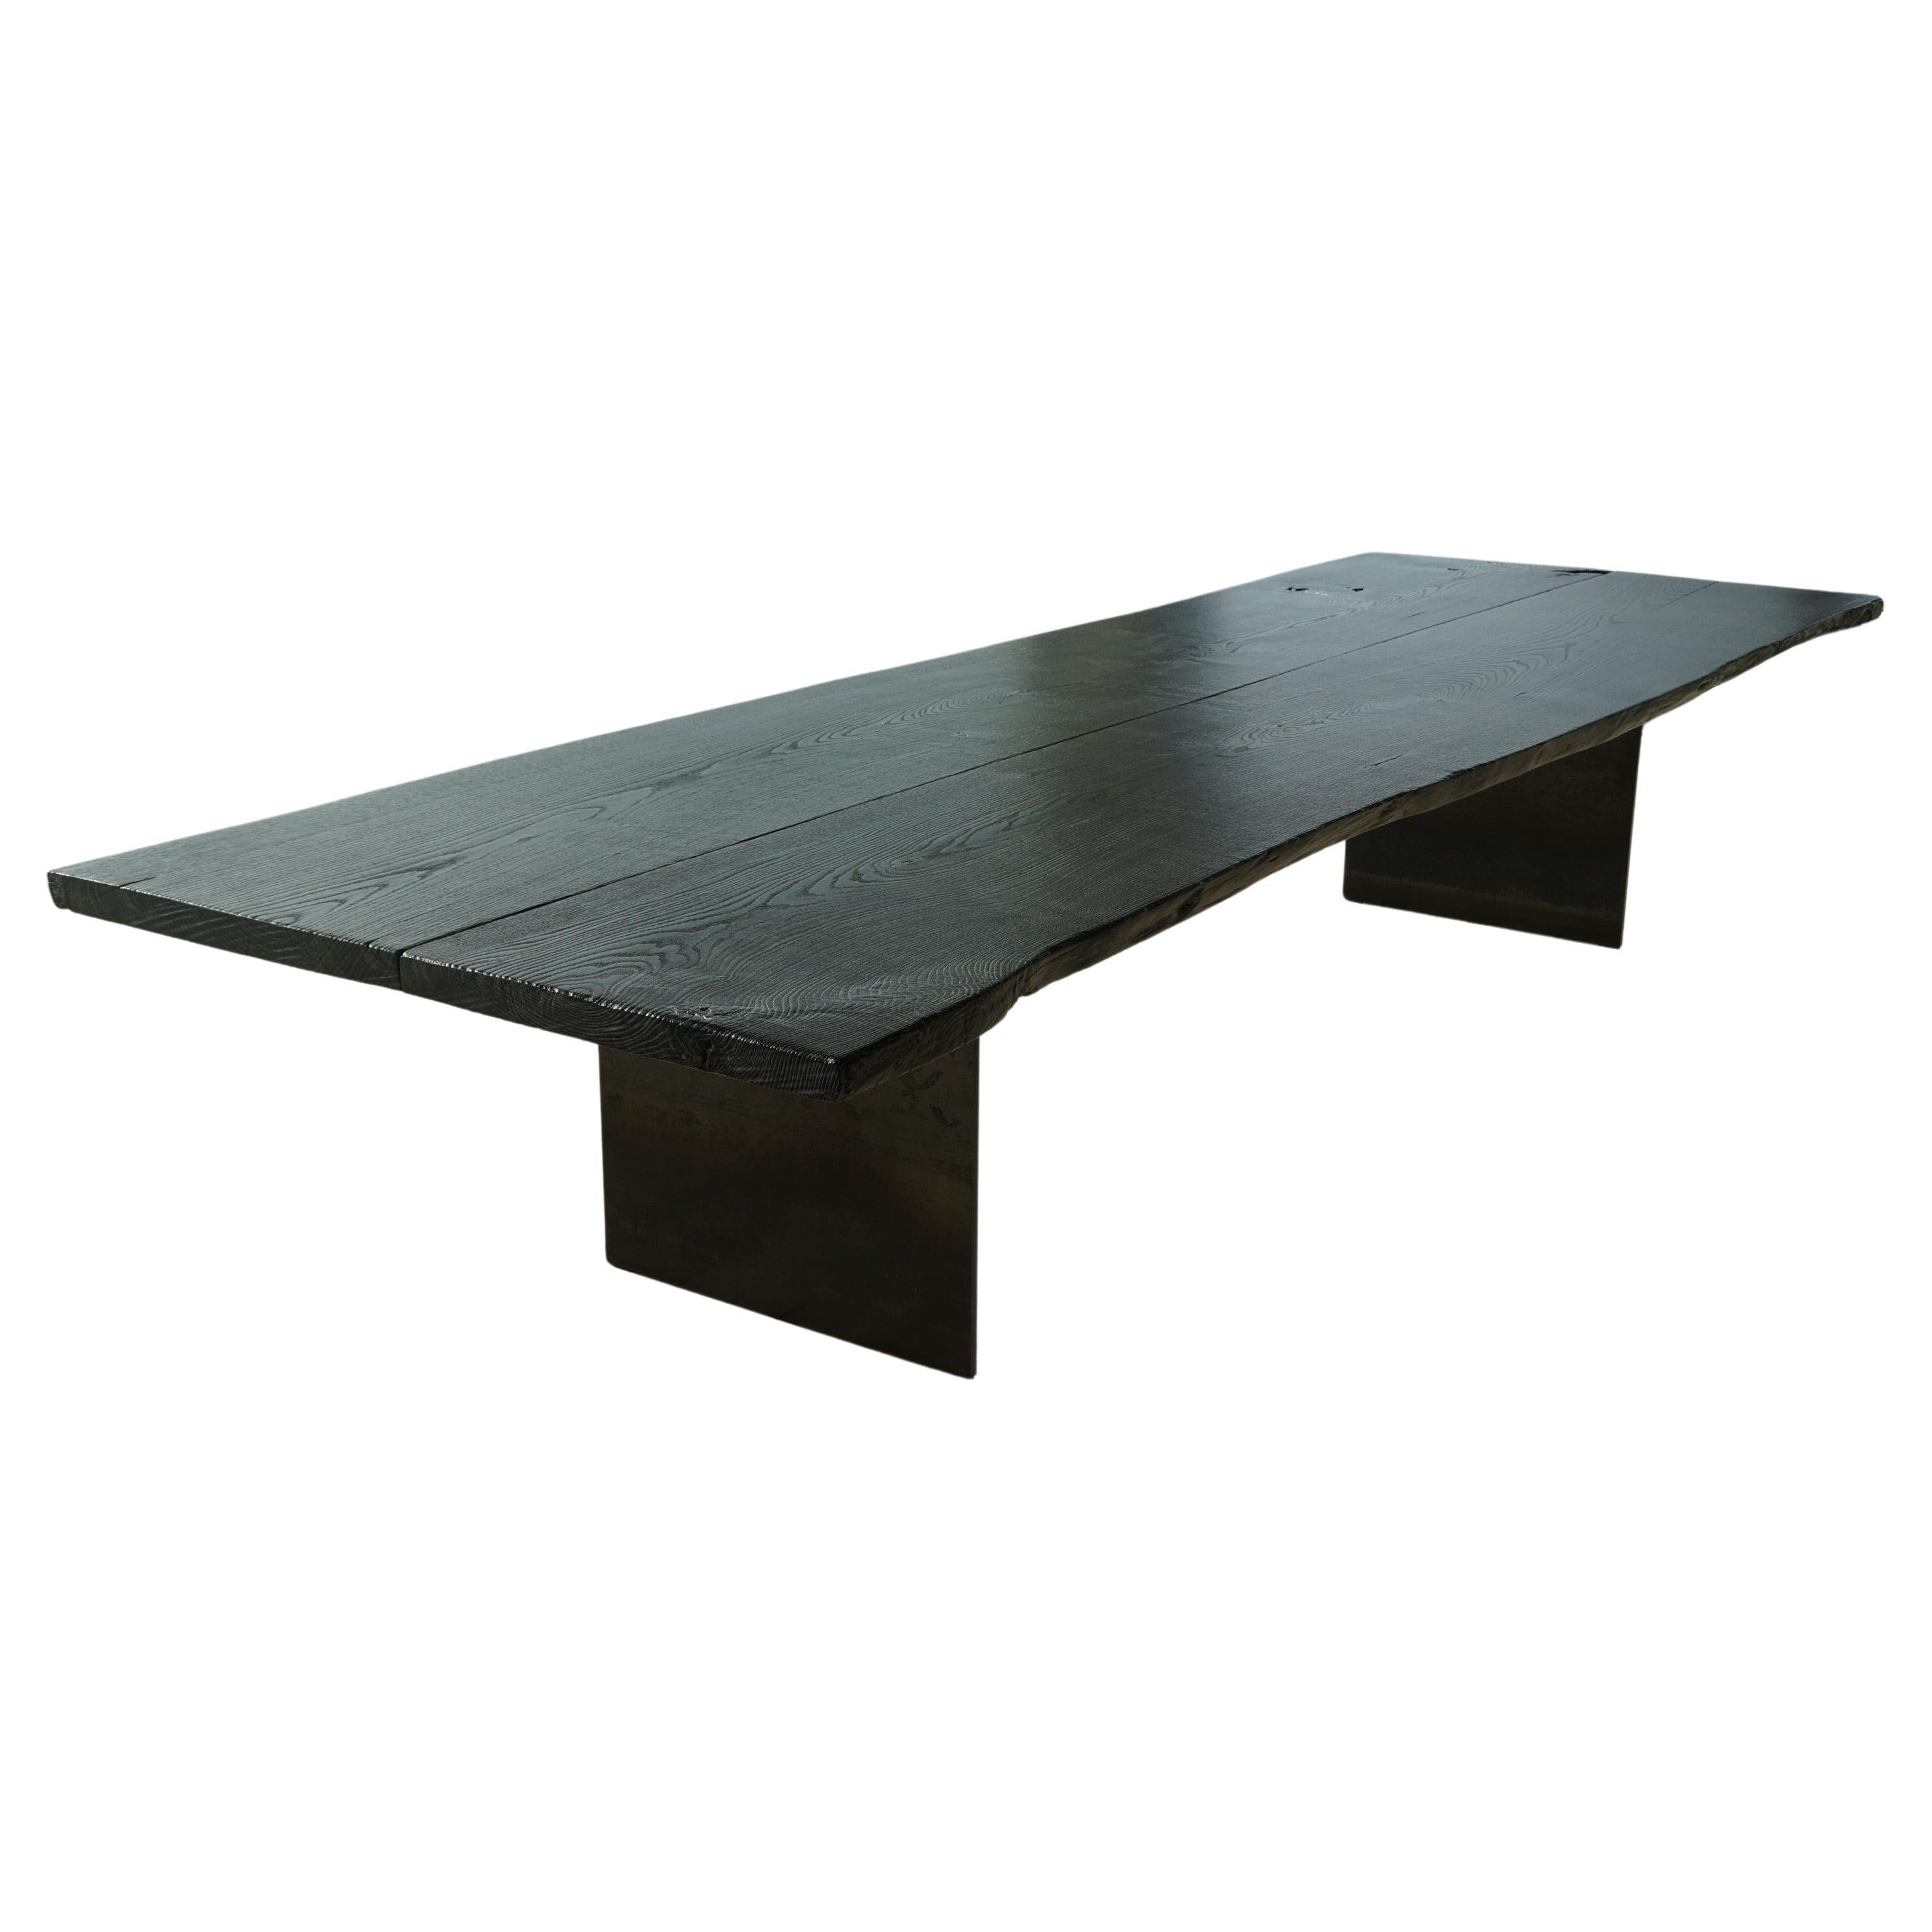 Table à main, grande table à manger en bois massif, en acier inoxydable, Stahlwangen